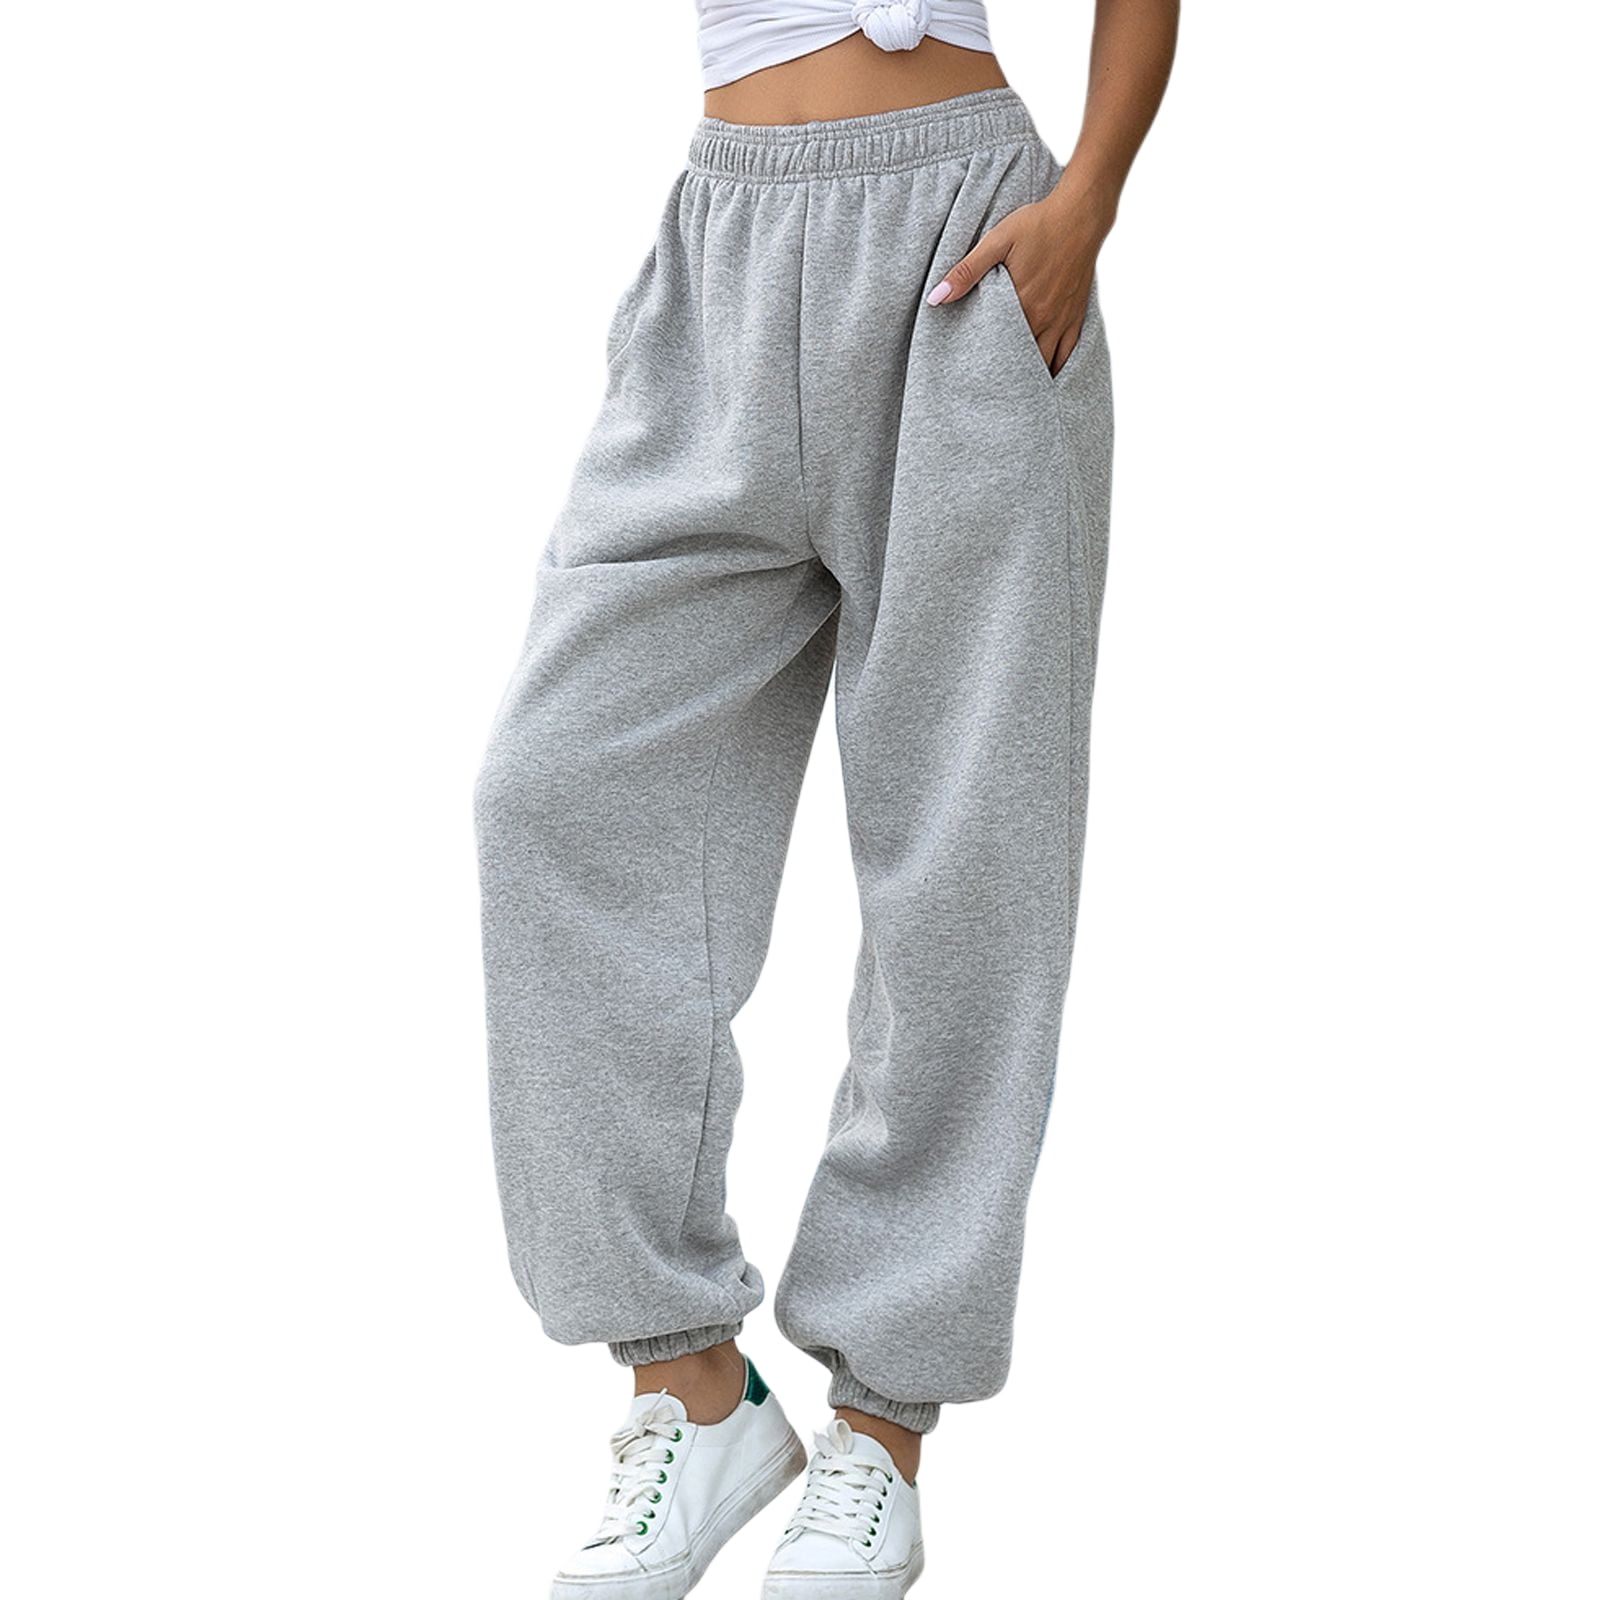 ATHVOTAR Flare Sweatpants Women Fleece Pants 2023 Autumn Winter